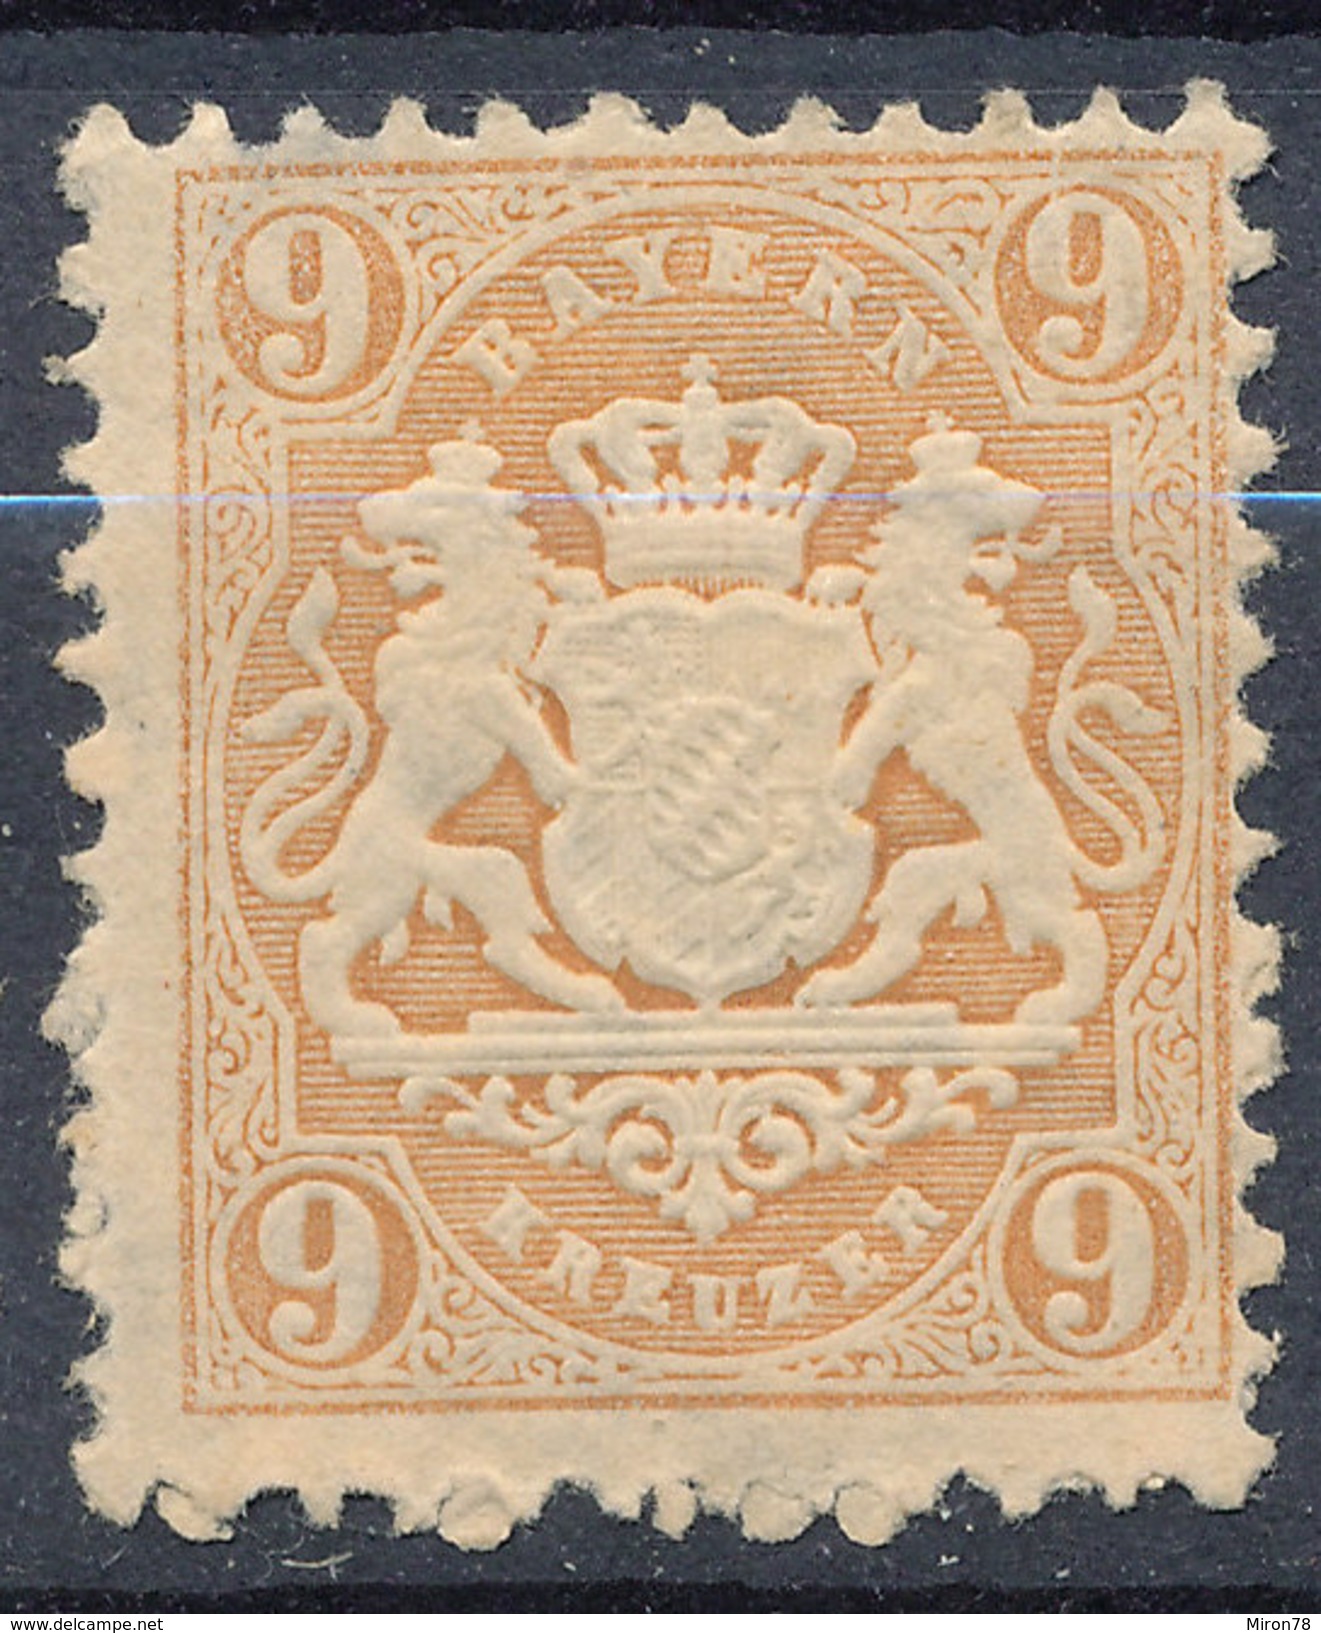 Stamp Bavaria 1870-75? 9kr Mint Lot#76 - Postfris